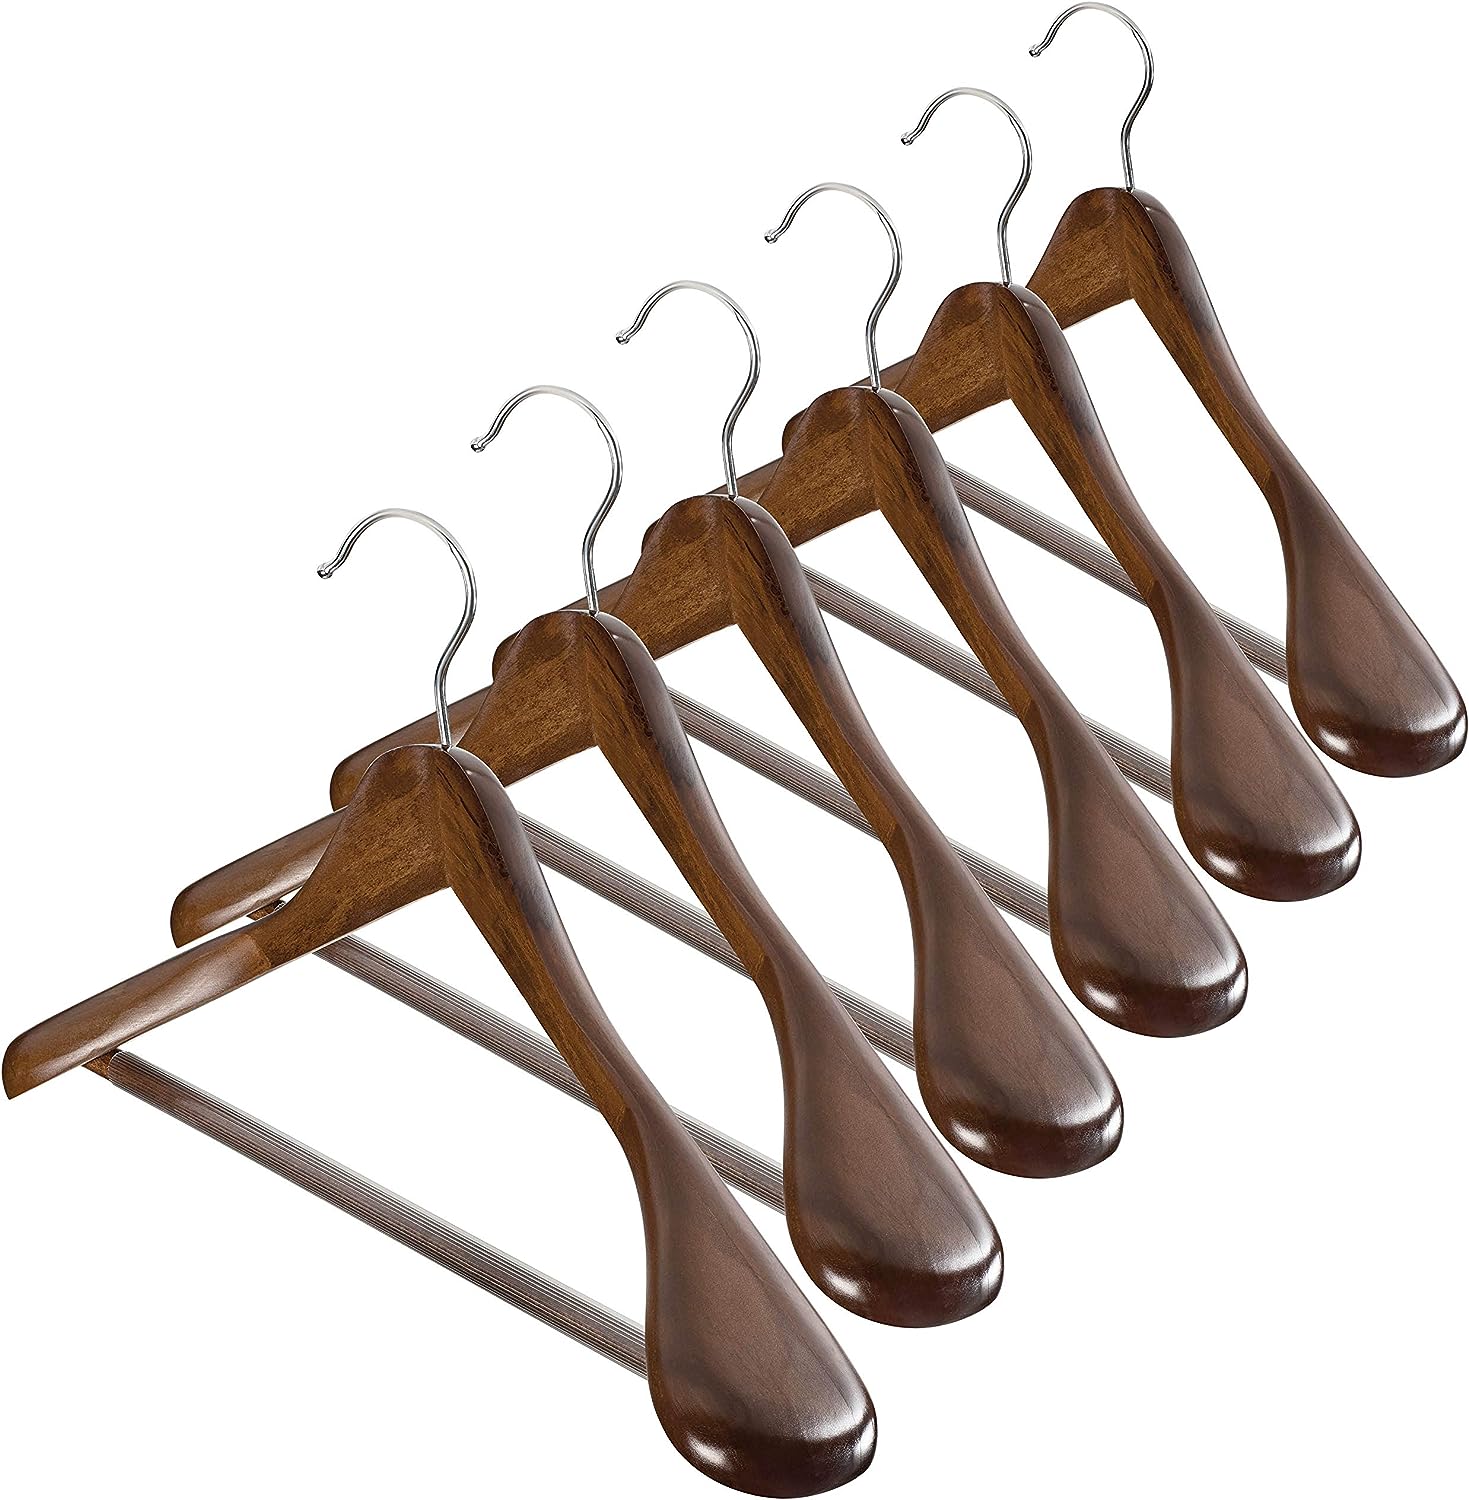 ZOBER Wooden Hangers with Non-Slip Bar, 6 Pack